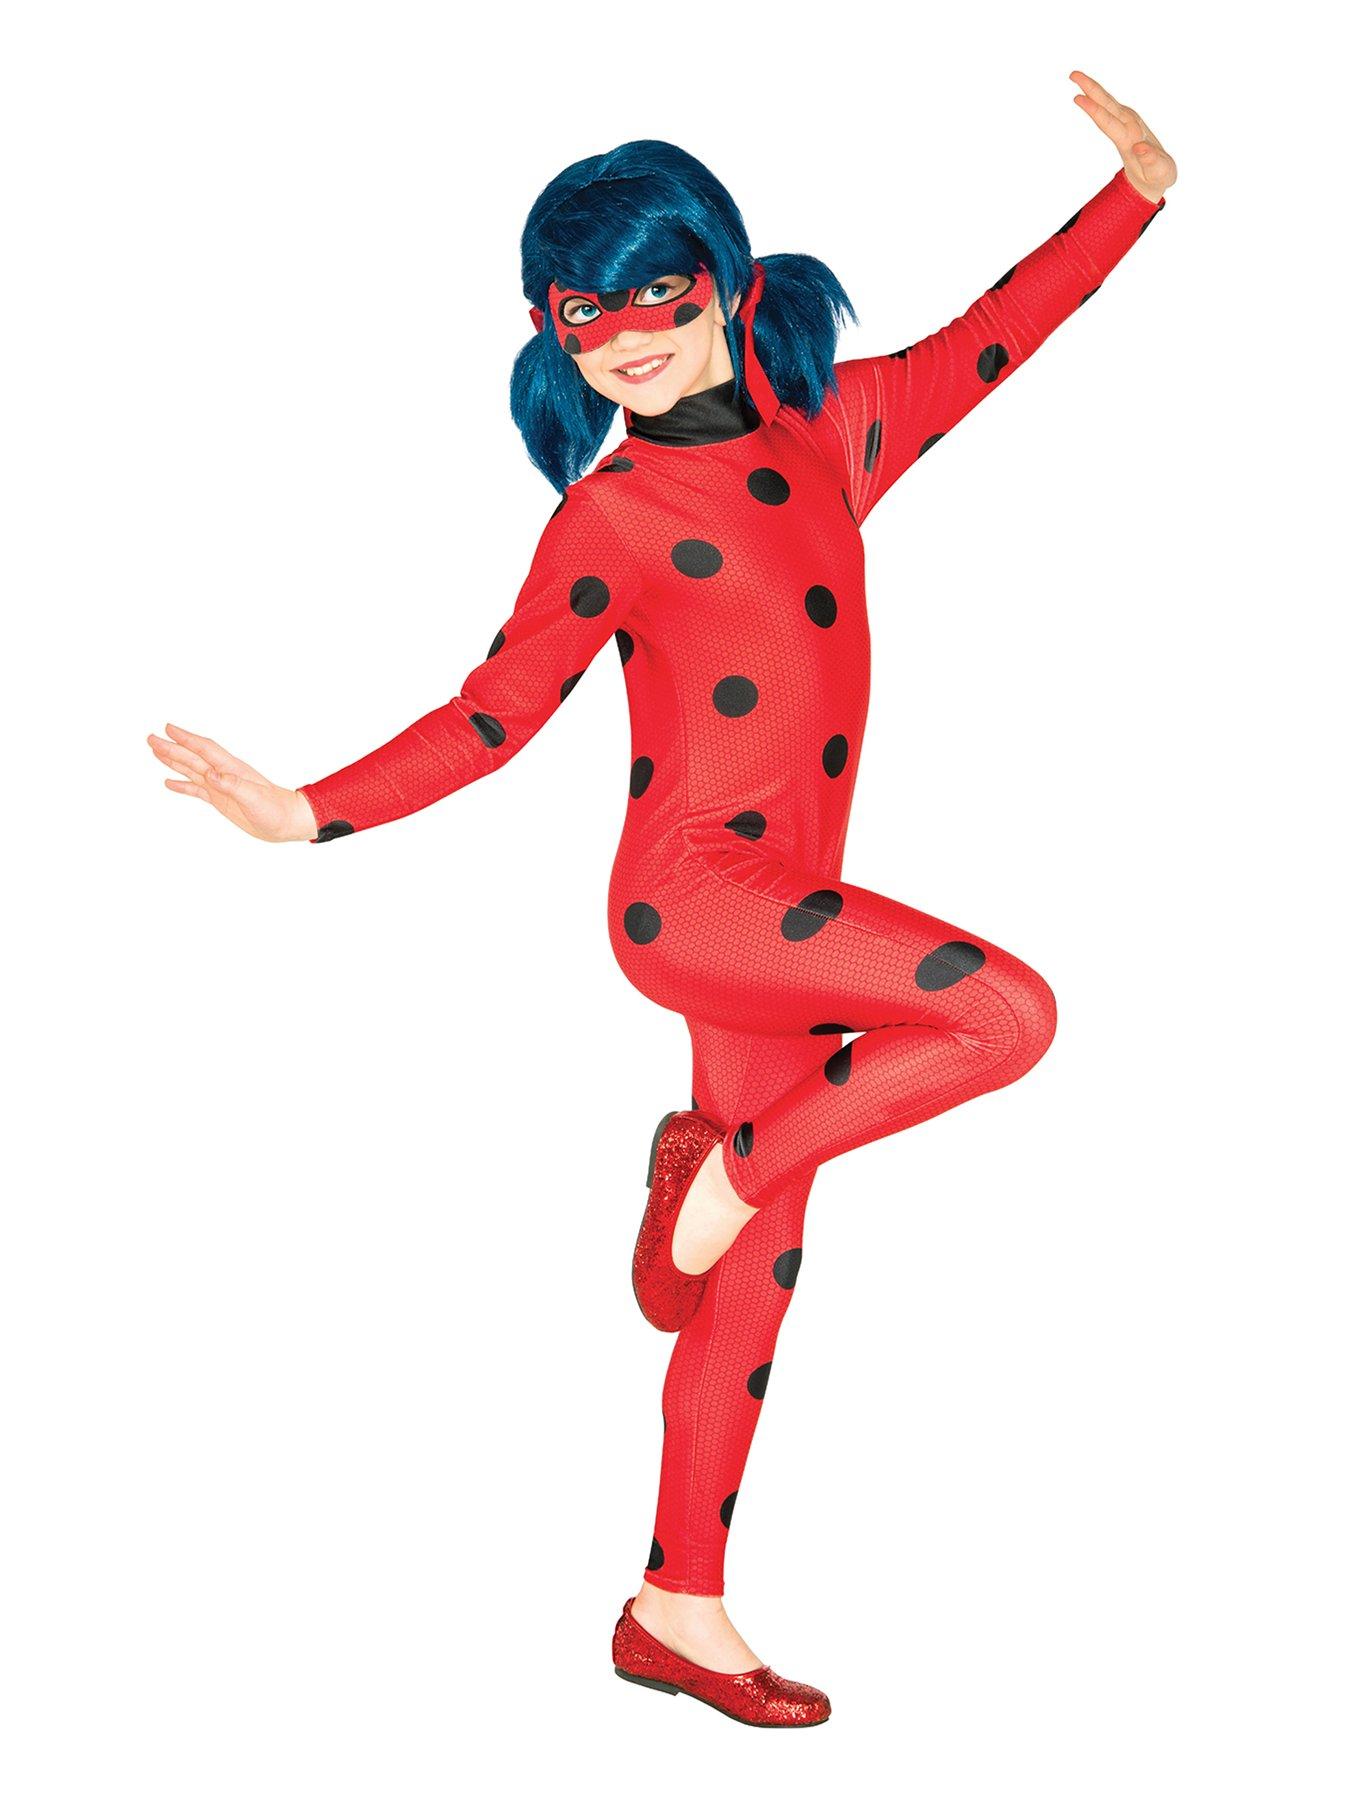 Arriba 76+ imagen ladybug outfit